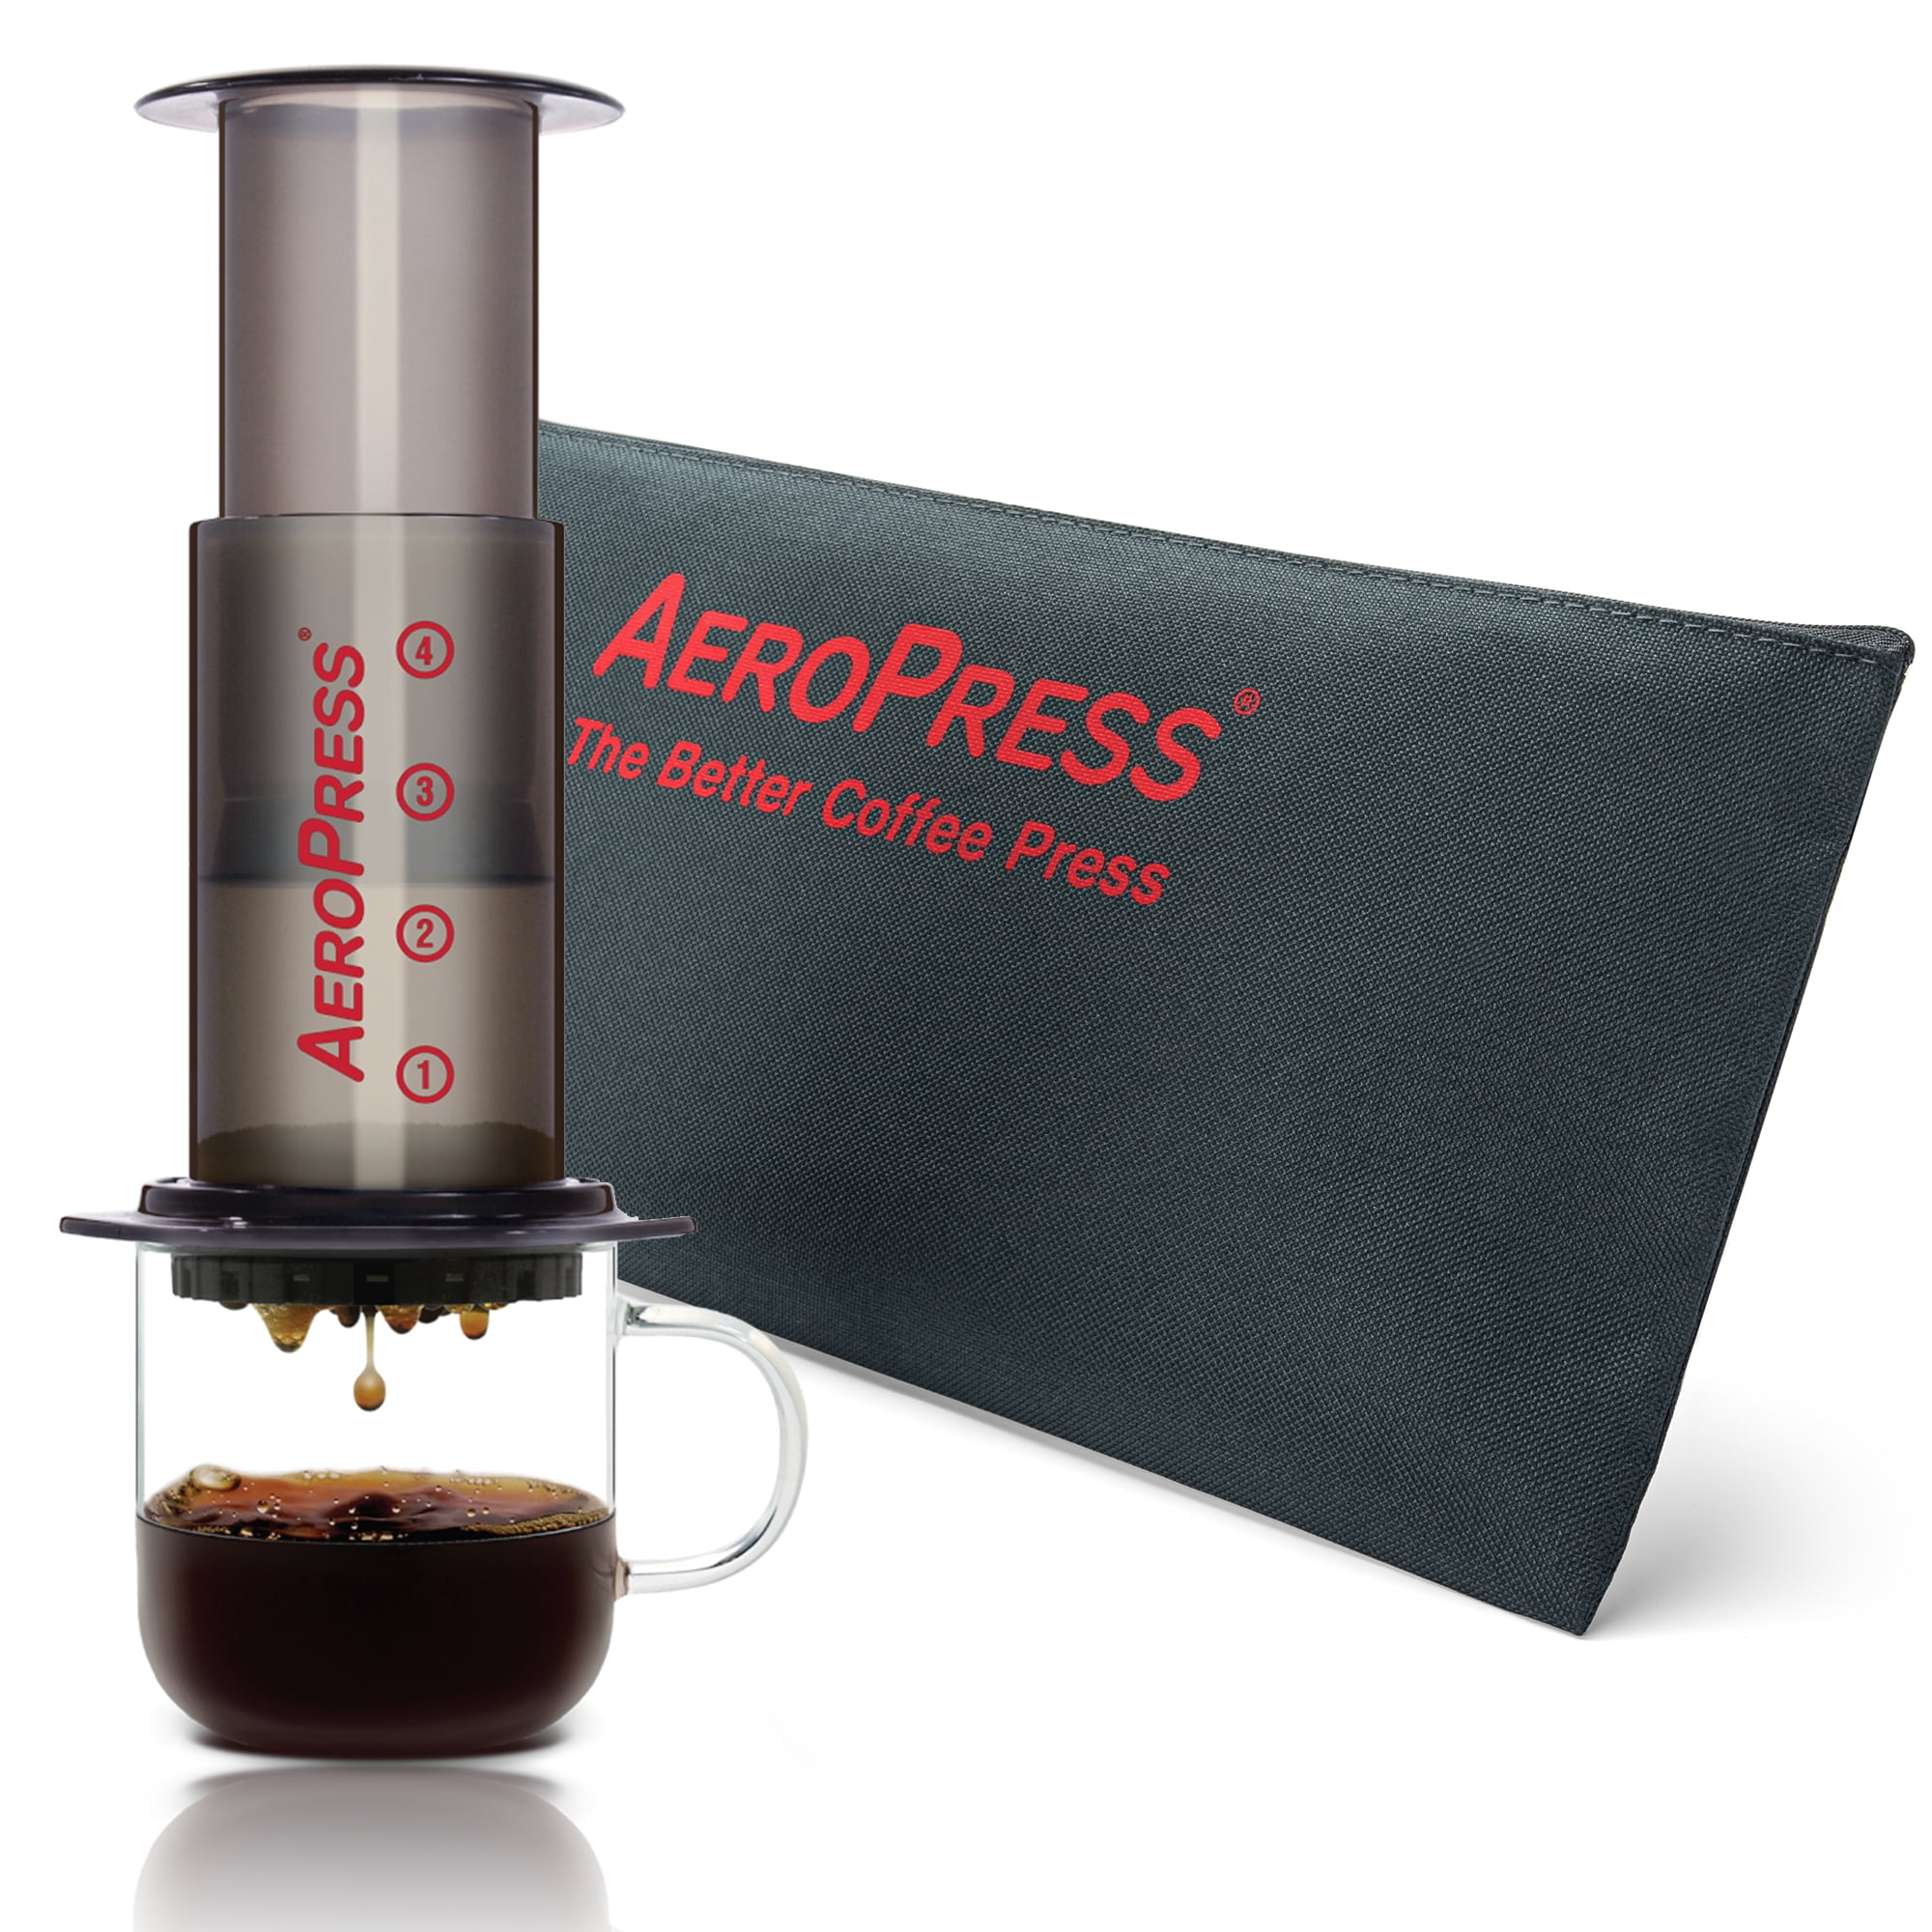 Aero Press coffee maker - appliances - by owner - sale - craigslist